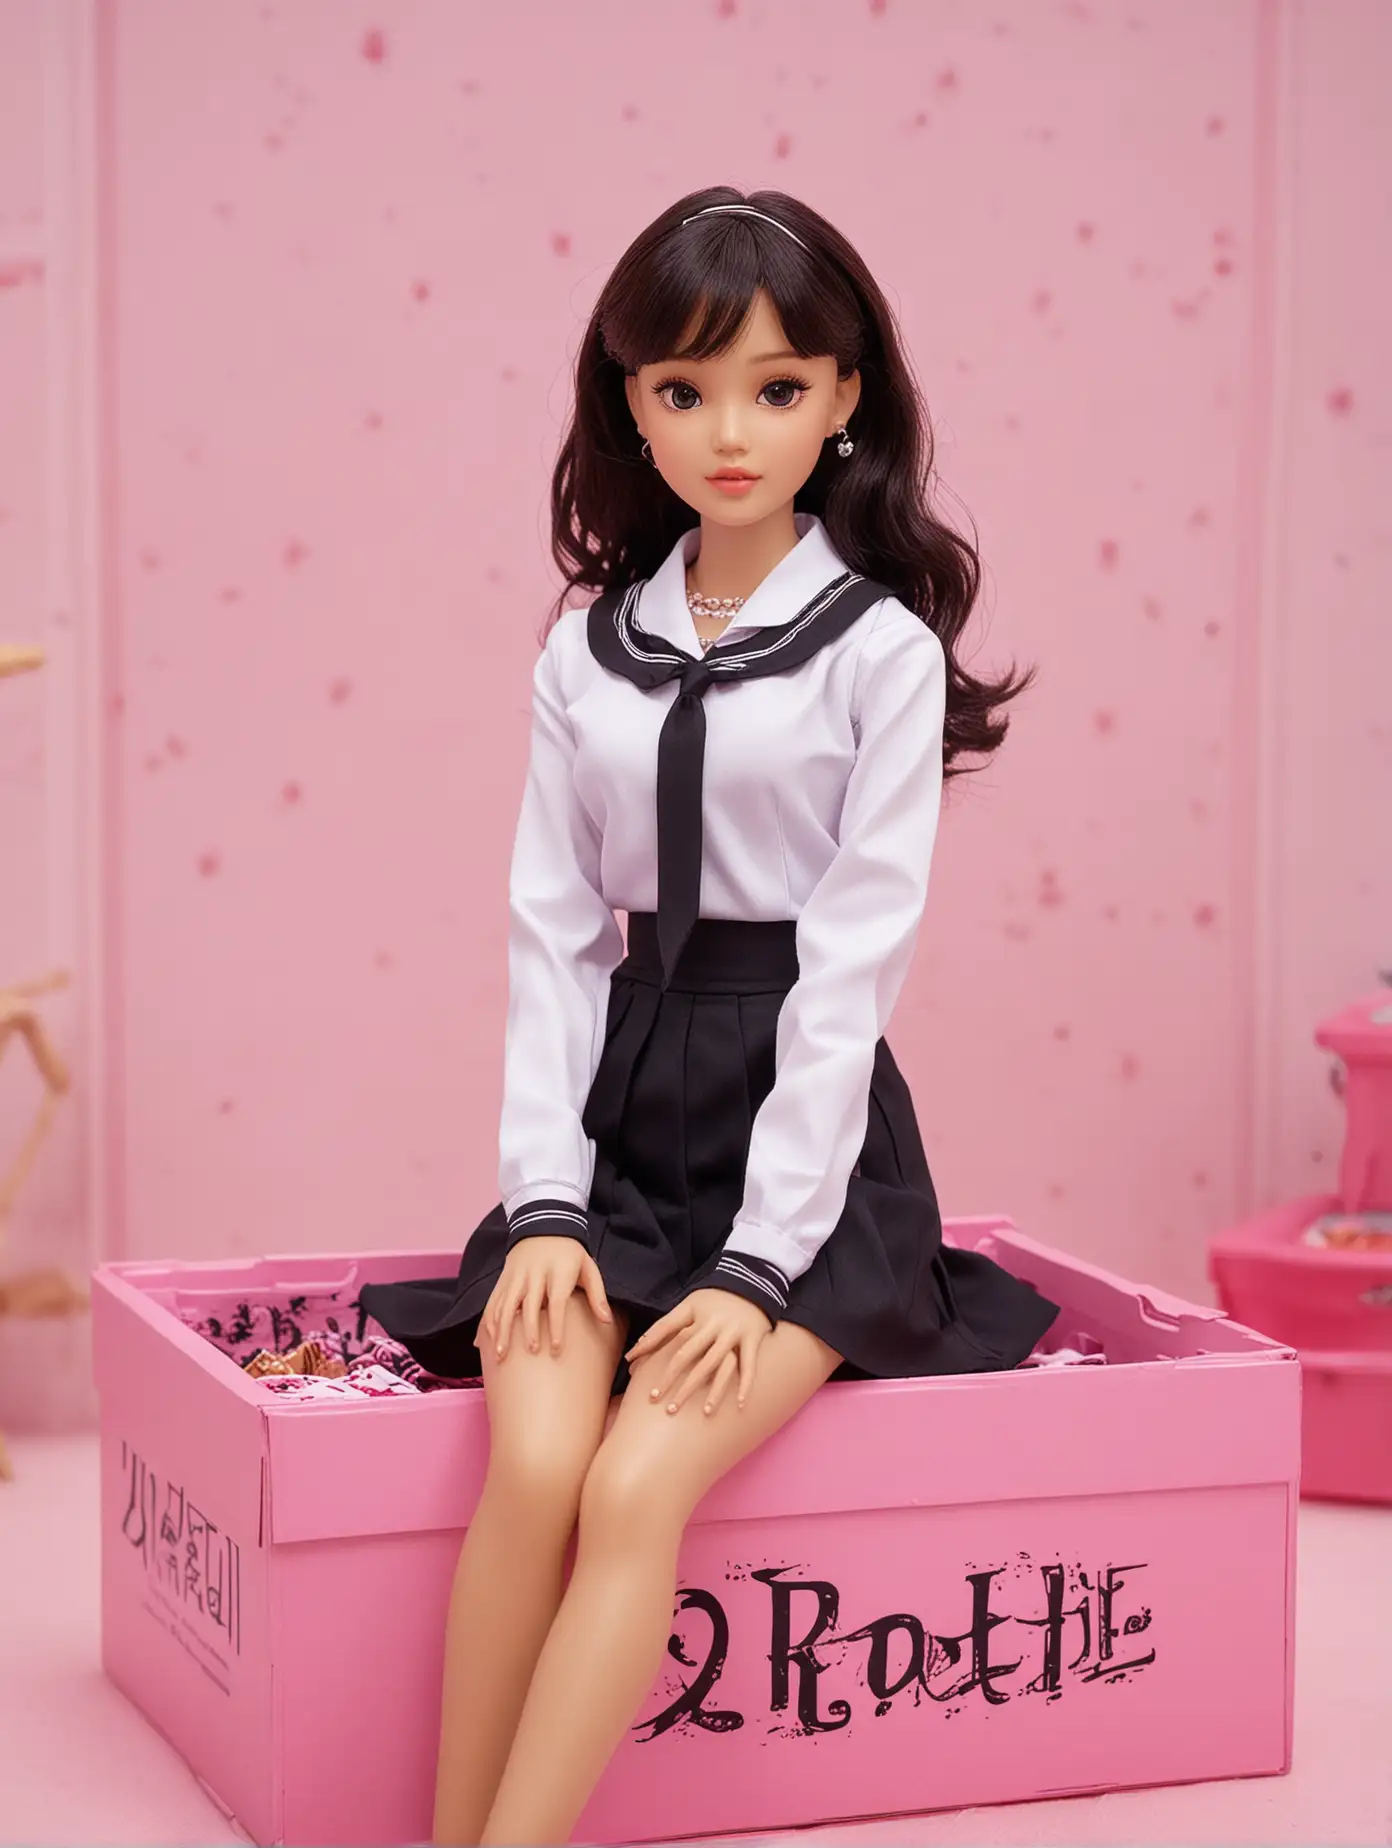 Teenage Barbie Doll Seo Yea-ji is Very Beautiful. Short wavy hair. wearing a black and white school uniform. sitting in a large pink box room.